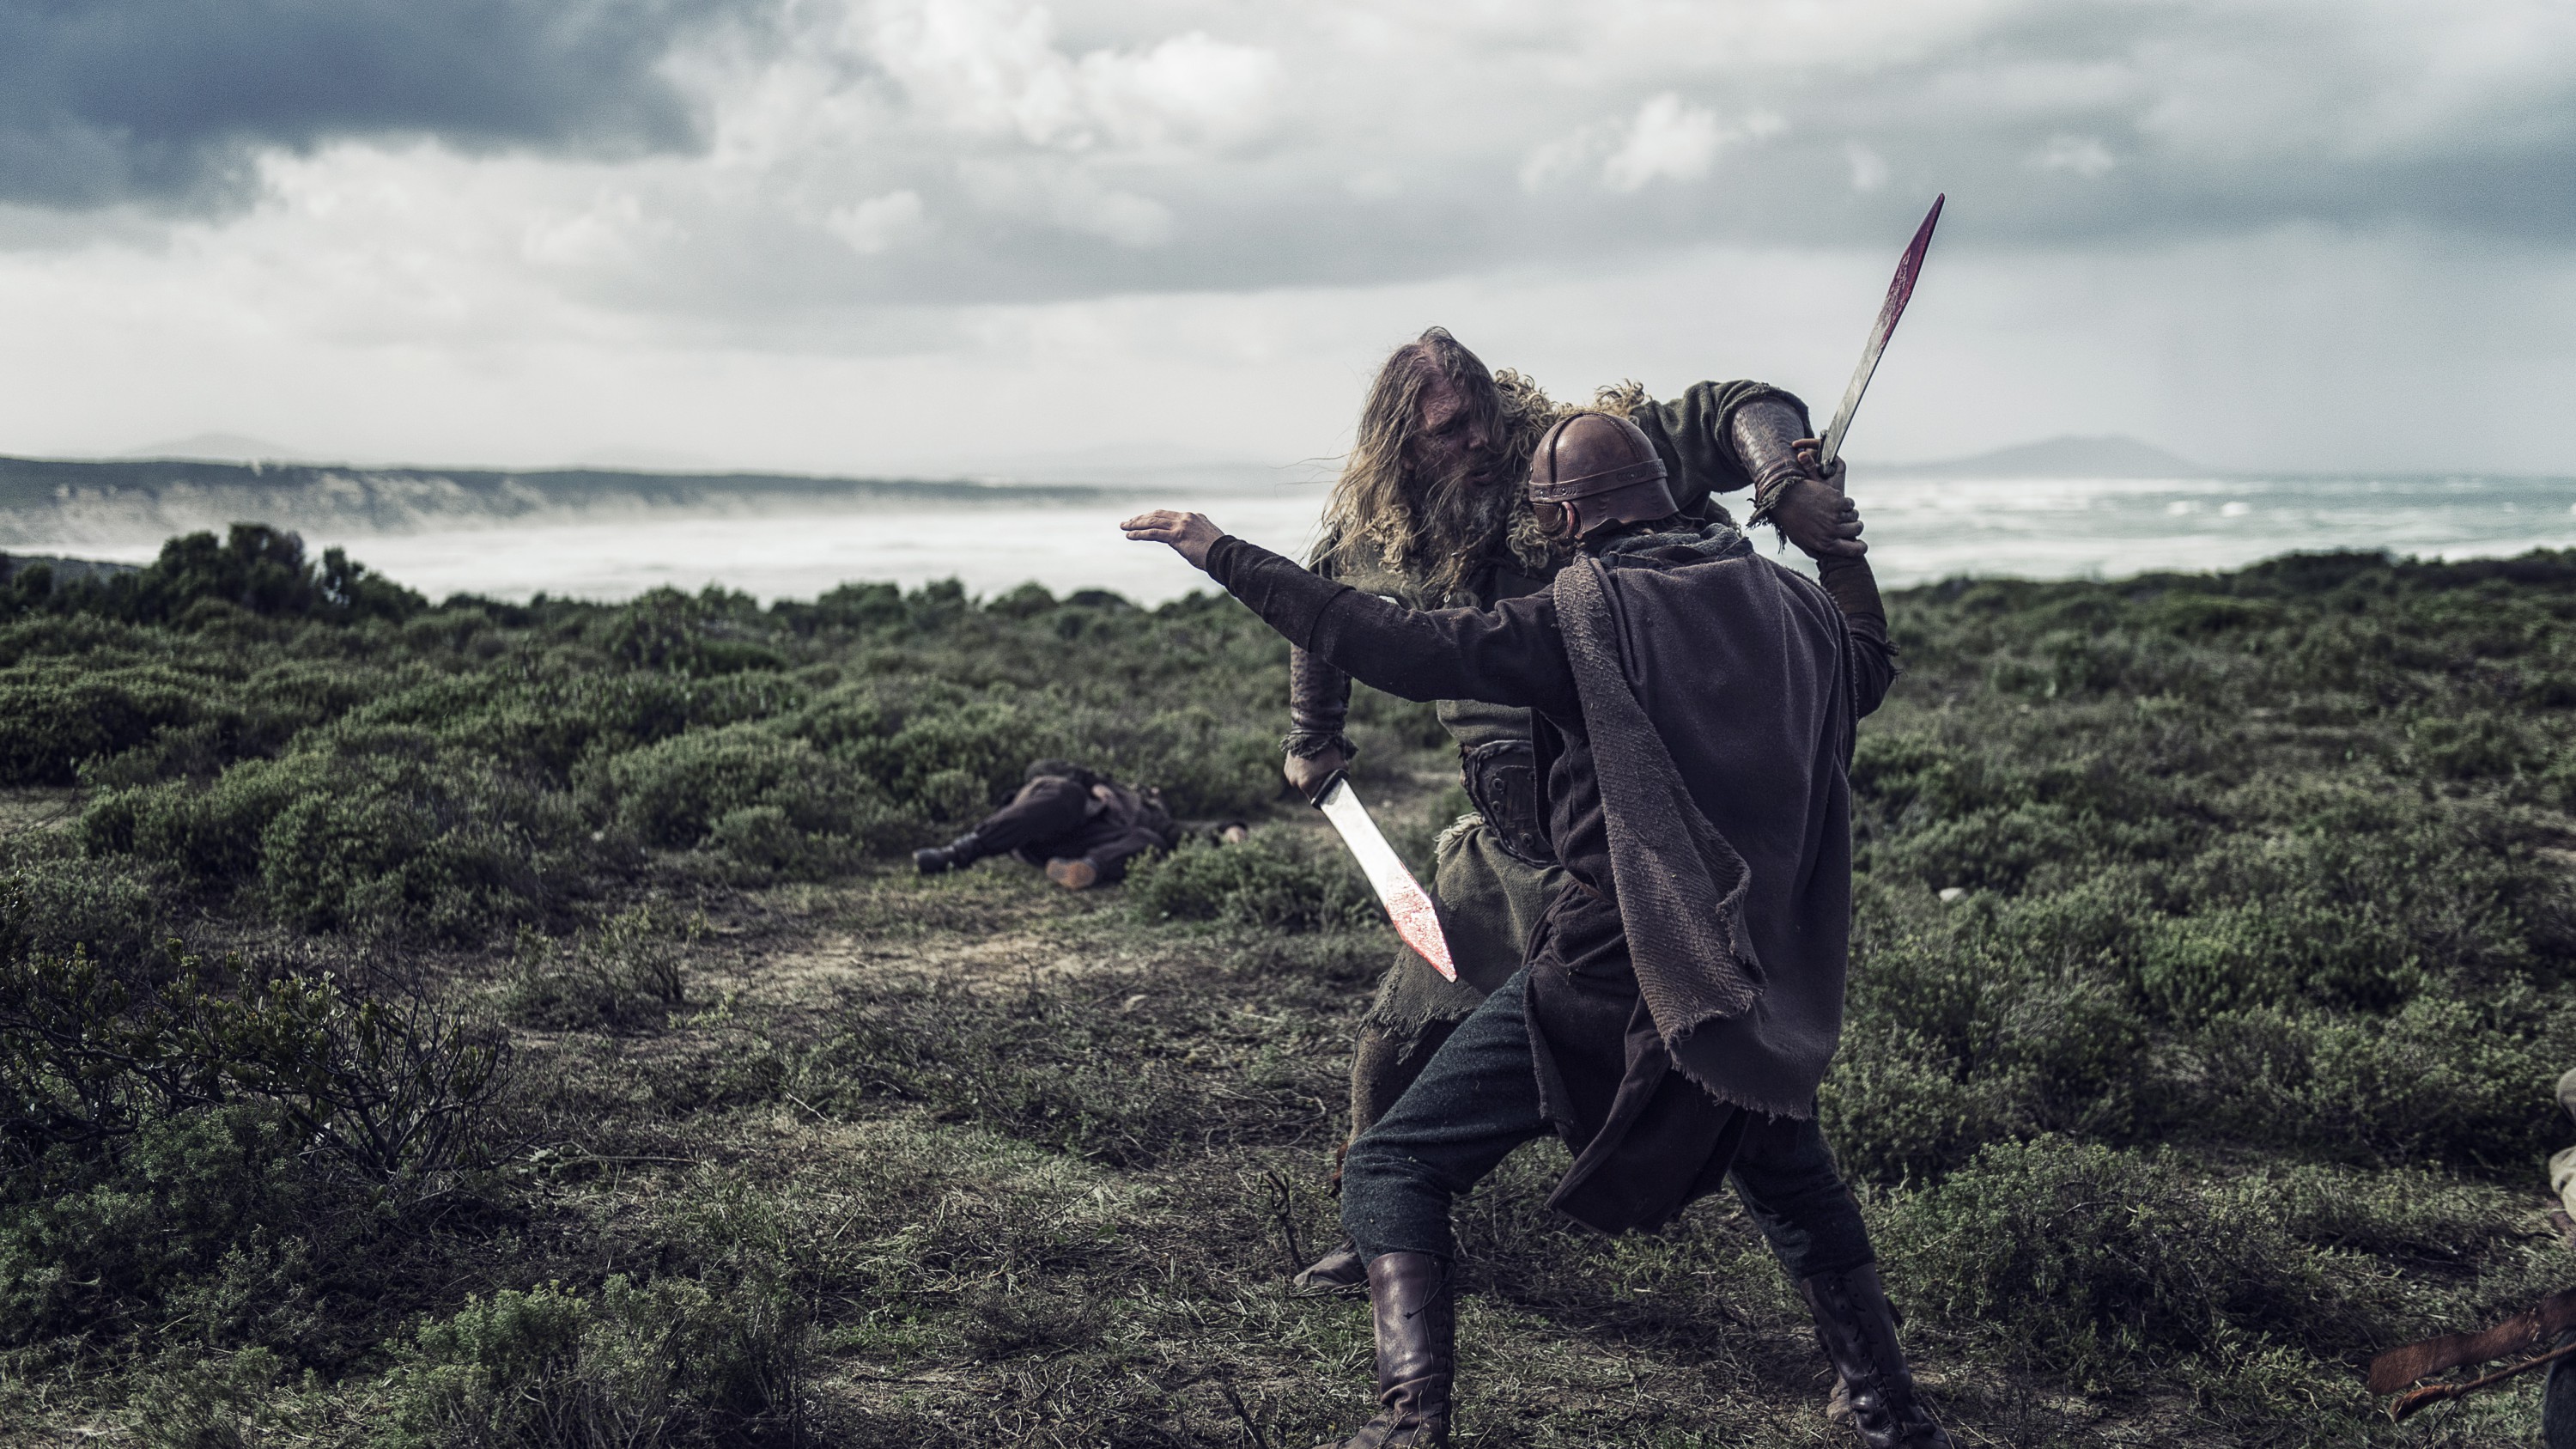 Northmen: A Viking Saga Wallpapers